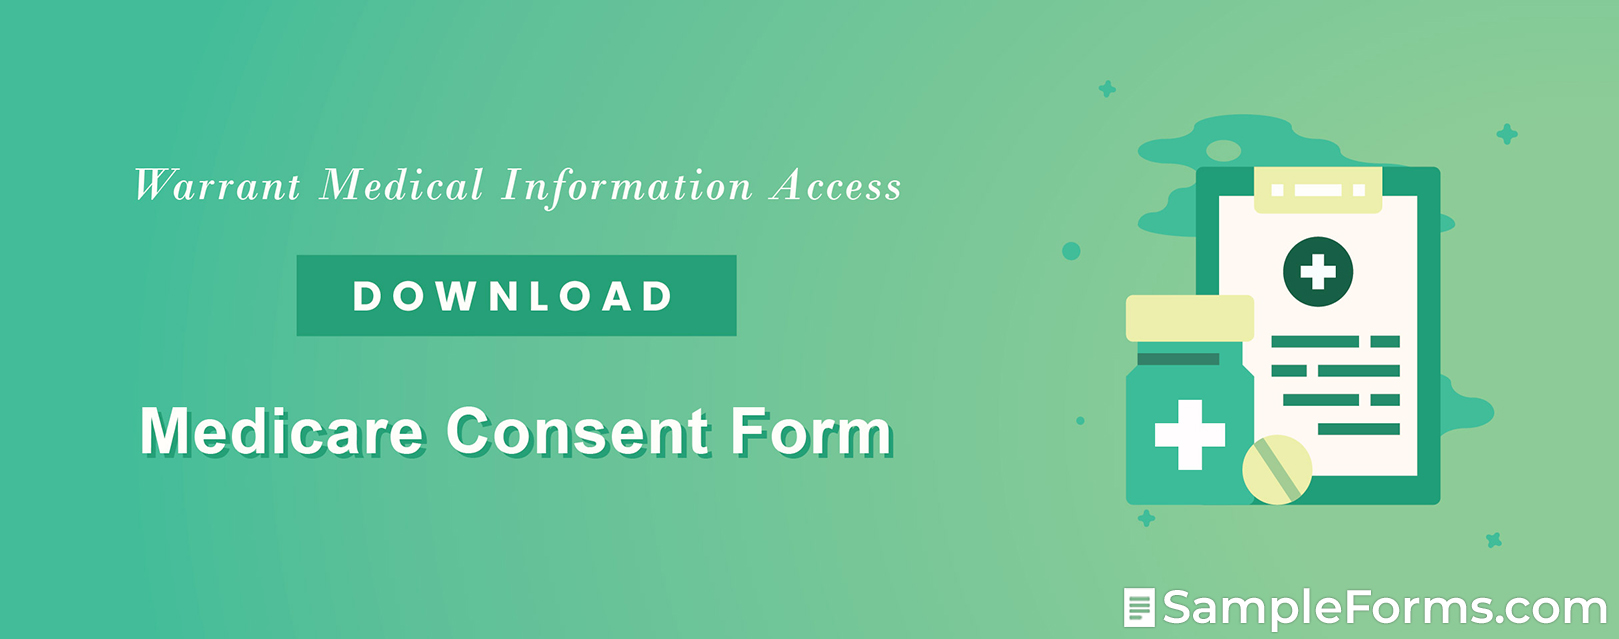 Medicare Consent Form1